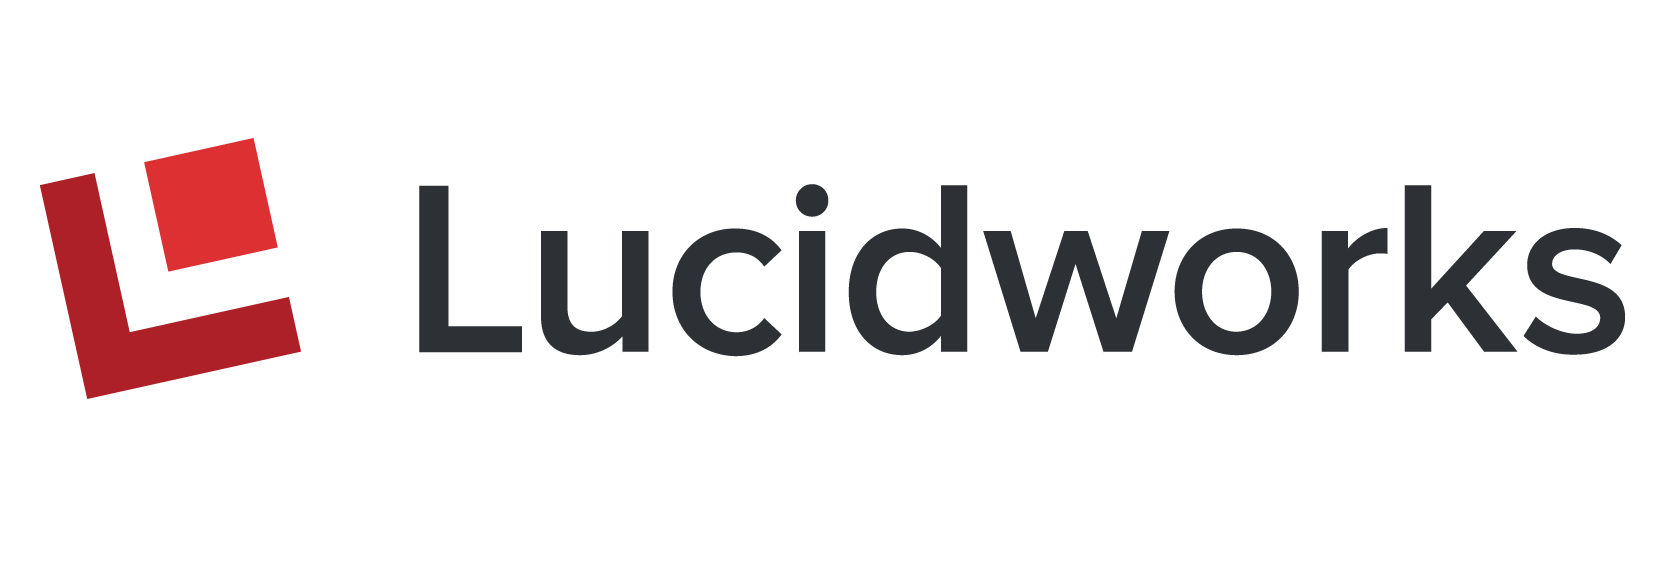 lucidworks